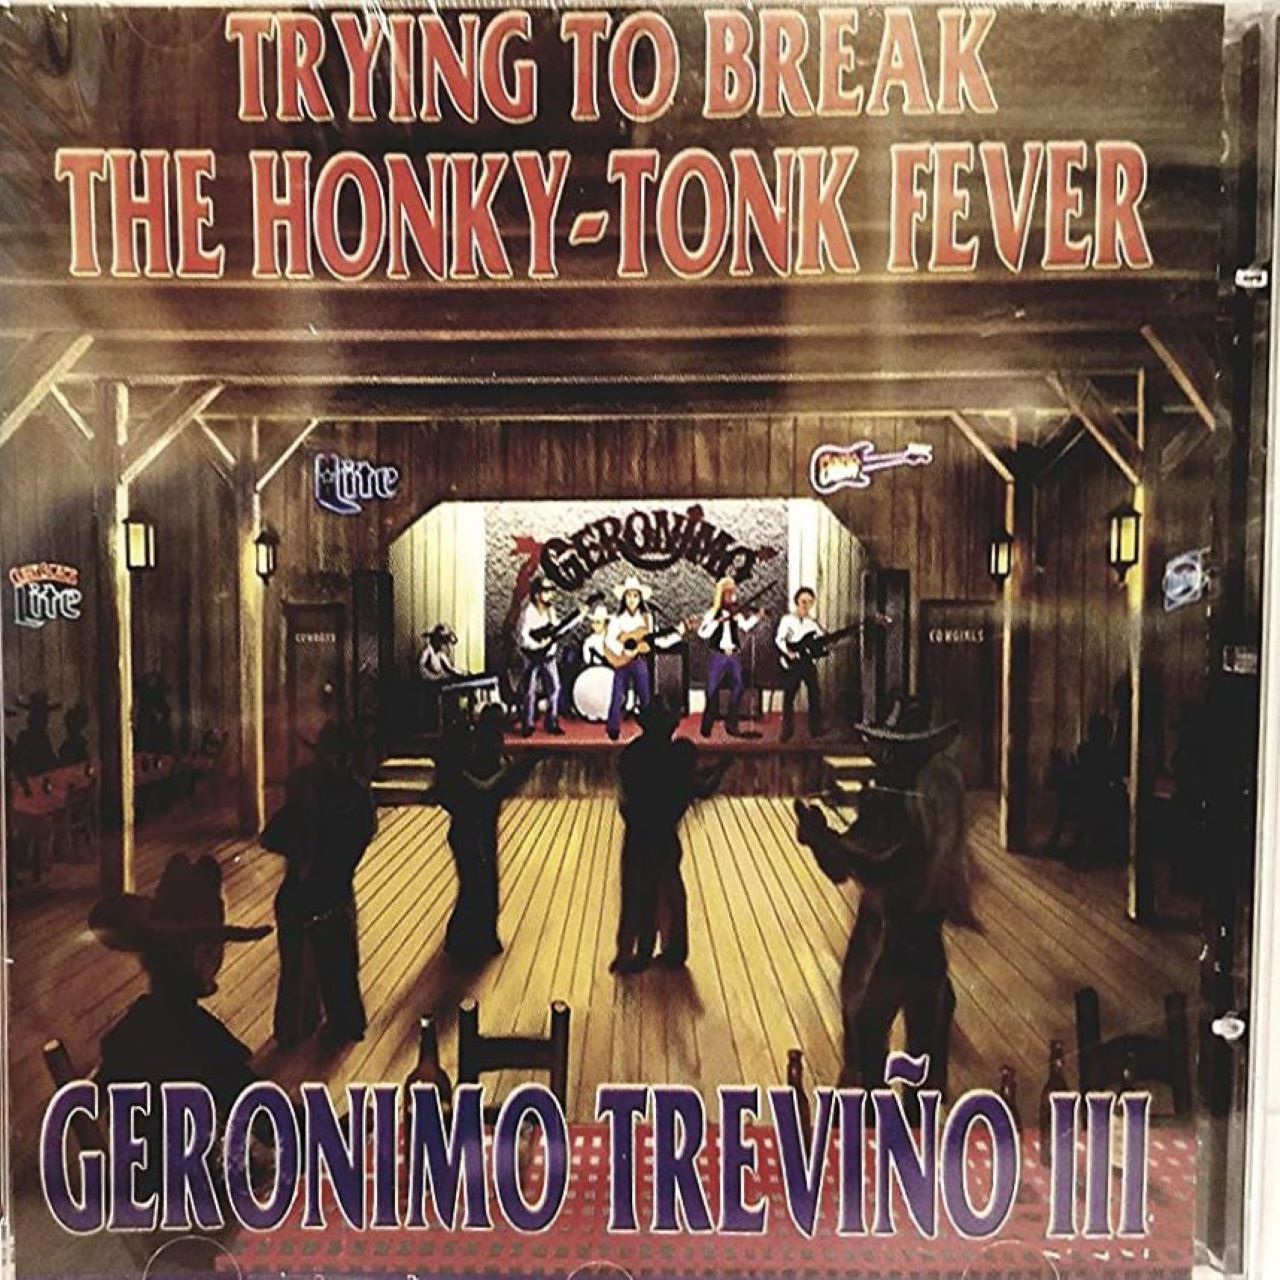 Geronimo Trevino III - Trying To Break The Honky-Tonk Fever cover album